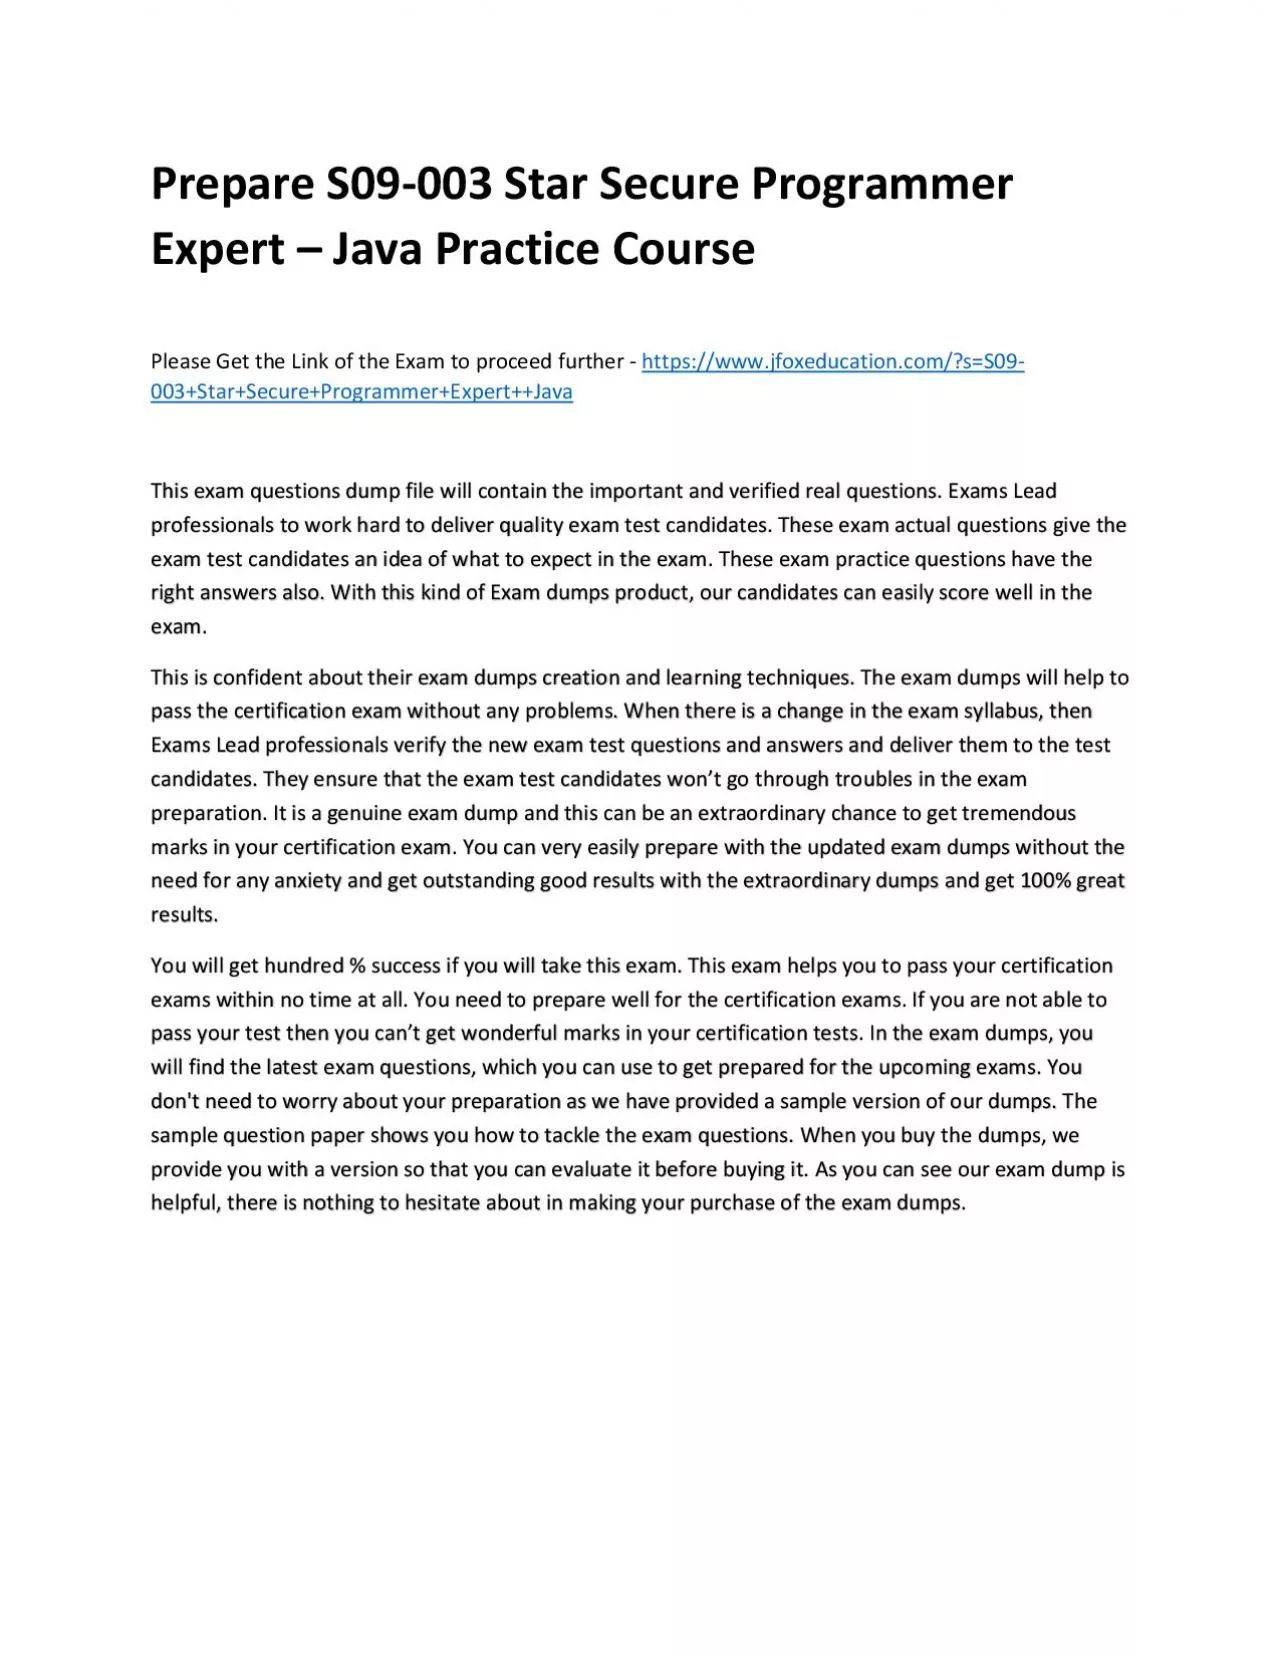 Prepare S09-003 Star Secure Programmer Expert – Java Practice Course